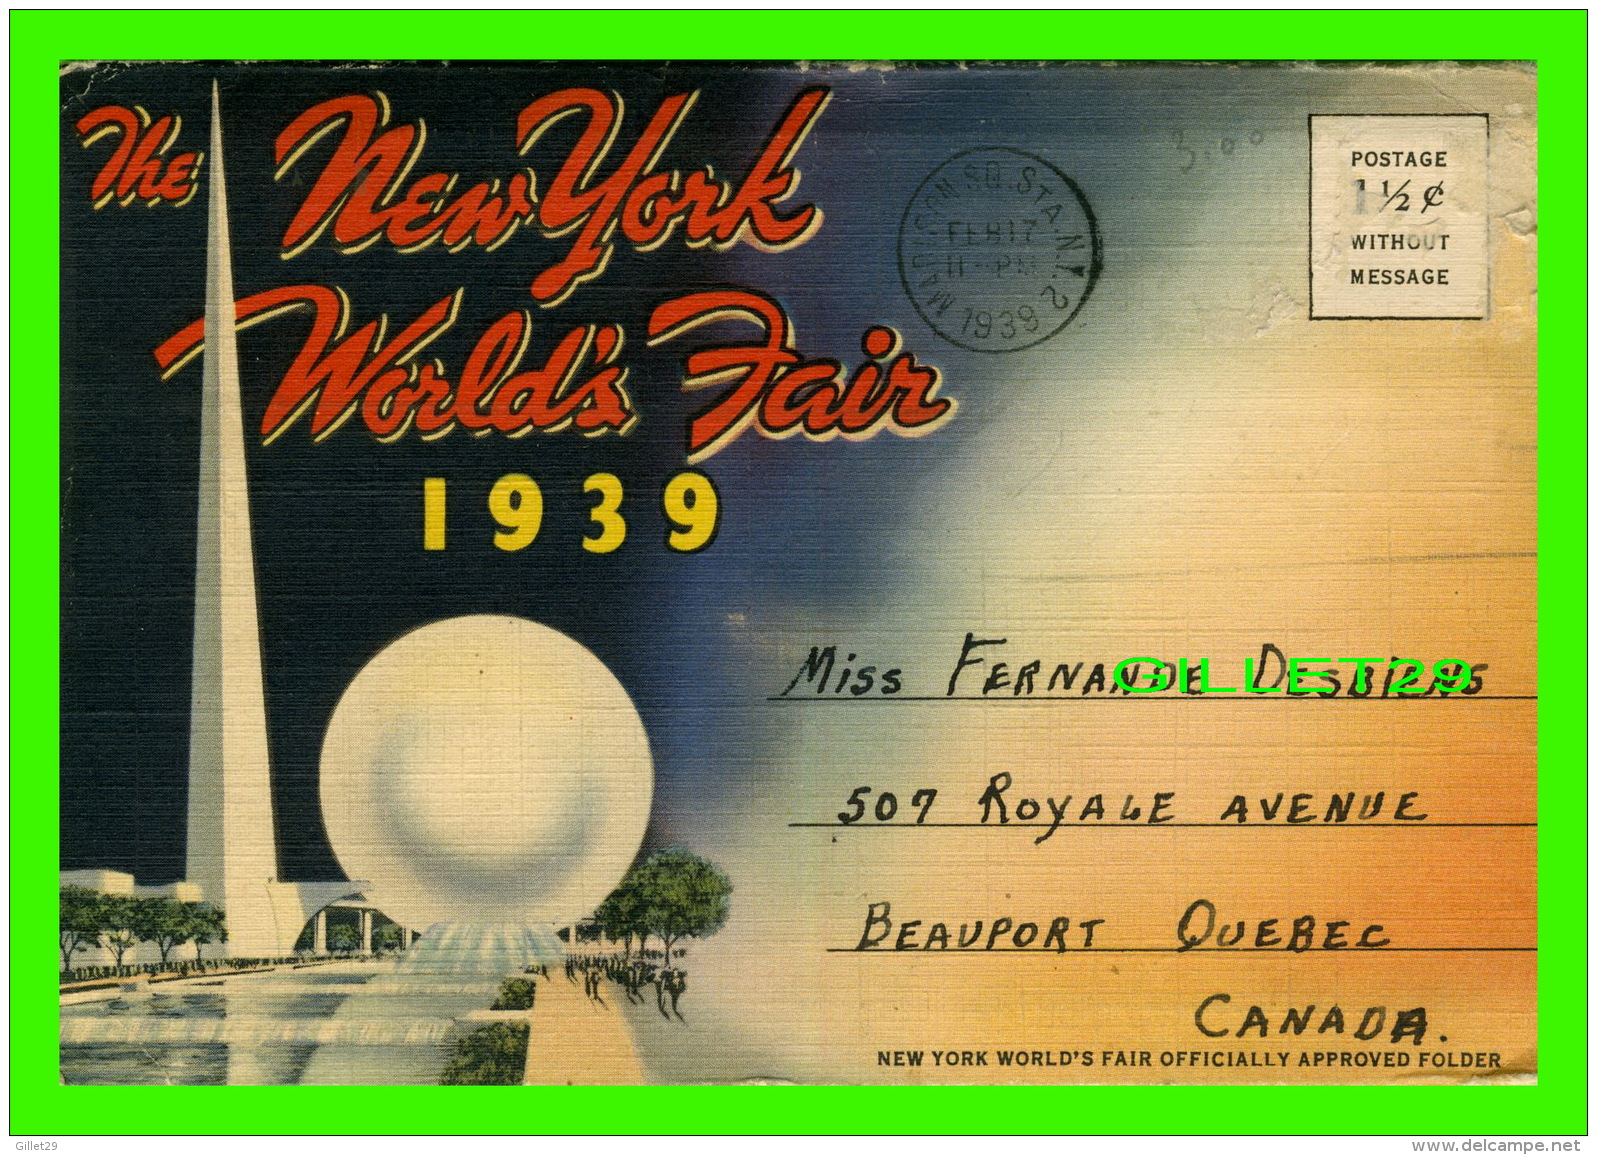 NEW YORK CITY, NY - NEW YORK WORLD'S FAIR FOLDER IN 1939 - TRAVEL IN 1939 - - Exhibitions